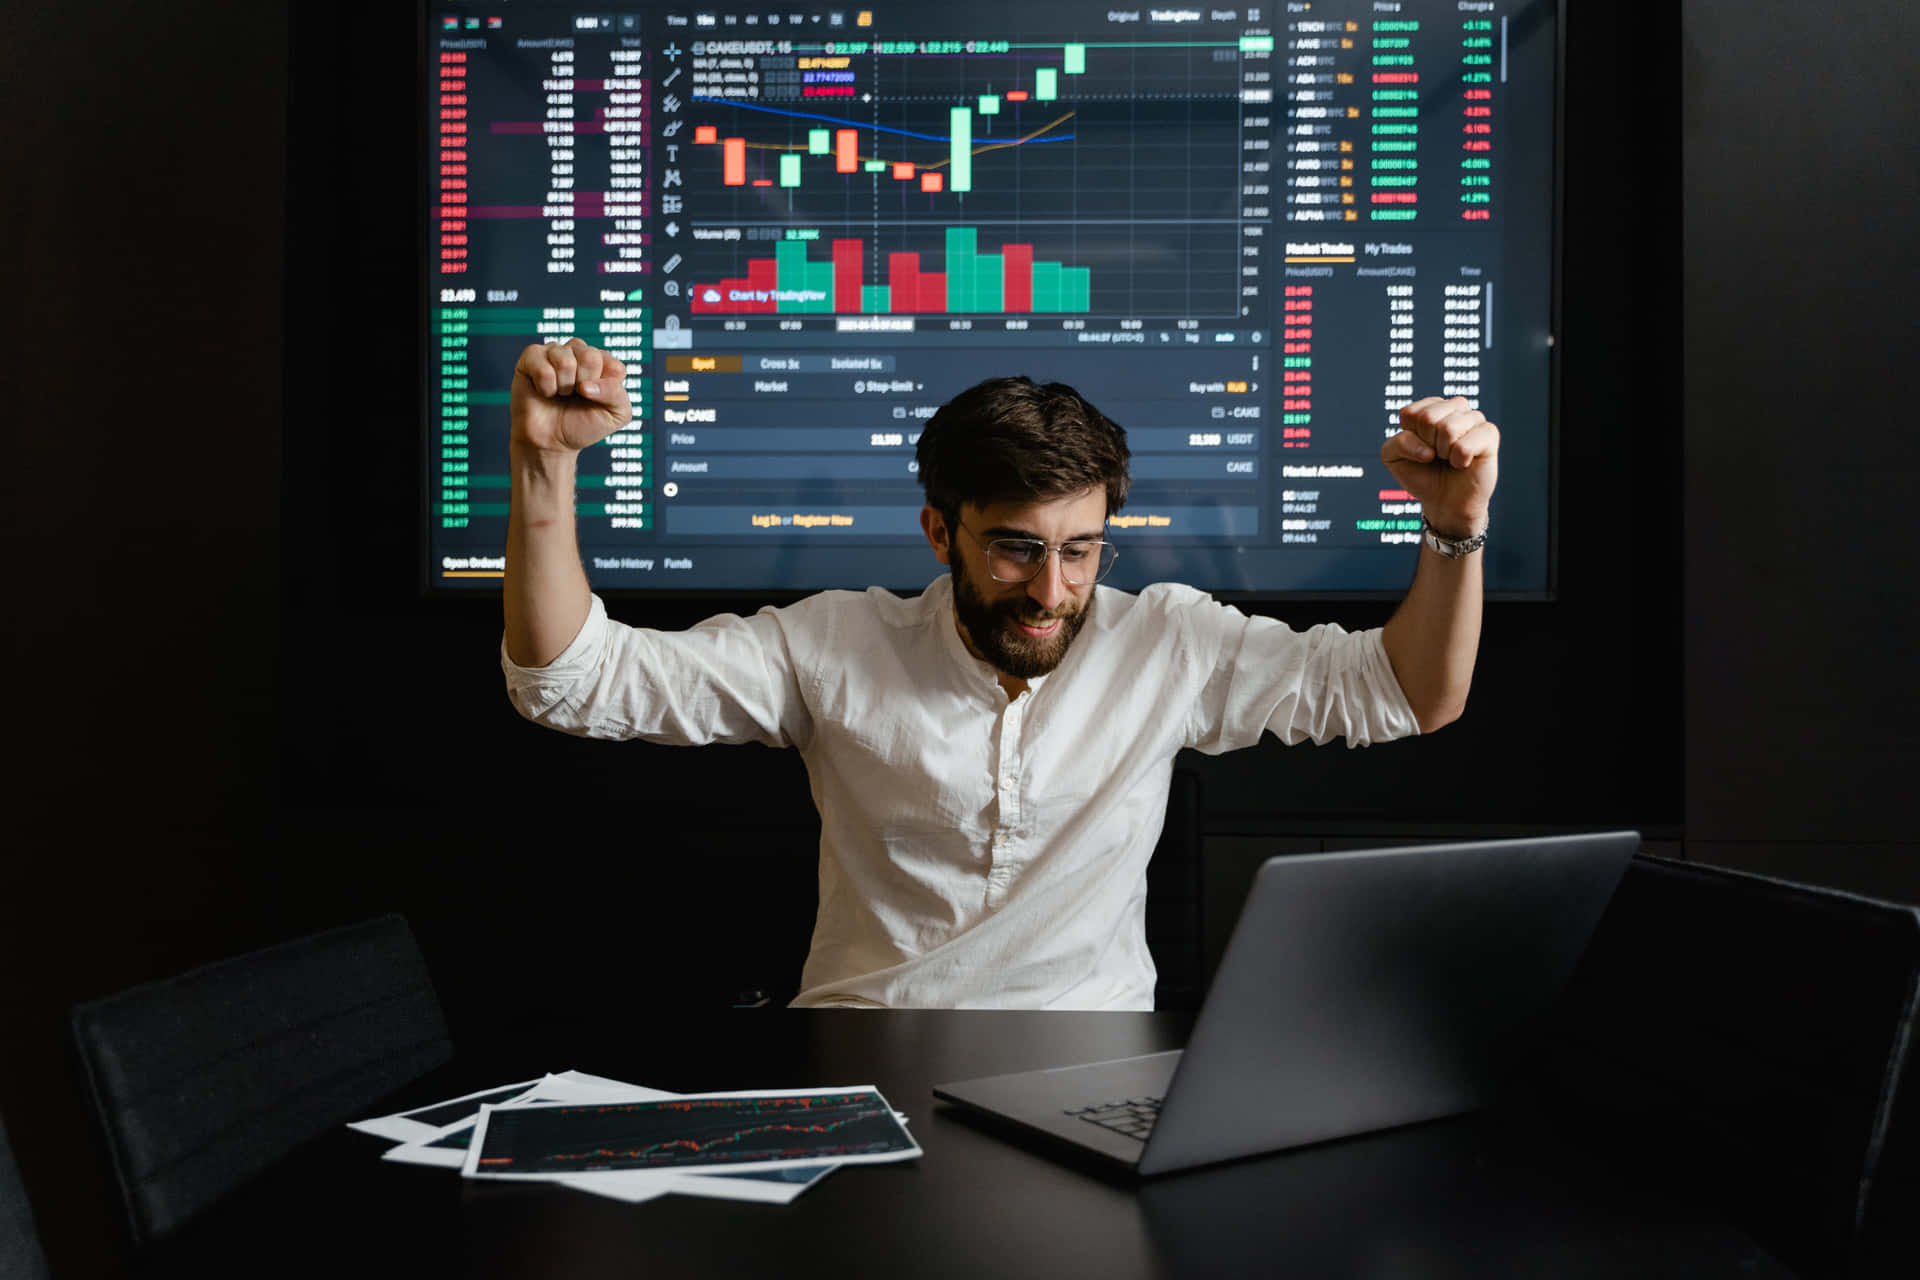 Successful Trader Celebratingin Frontof Stock Market Monitors.jpg Wallpaper